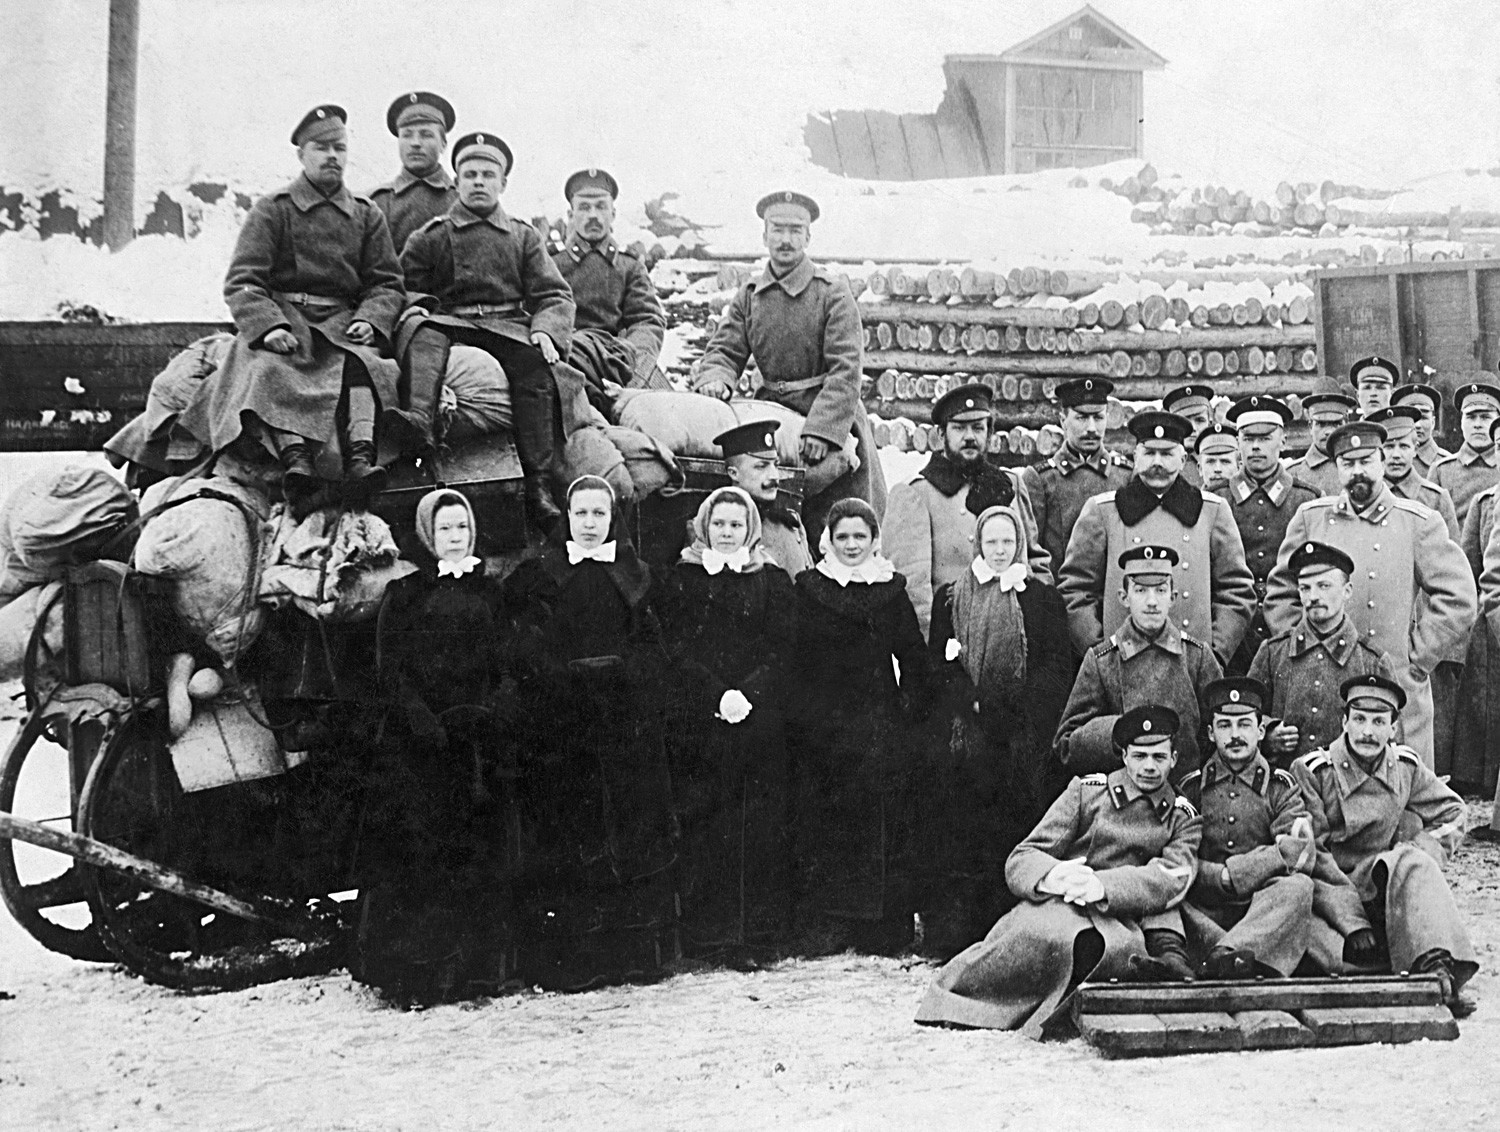  Members of a Russian Red Cross detachment during World War I, circa 1915.